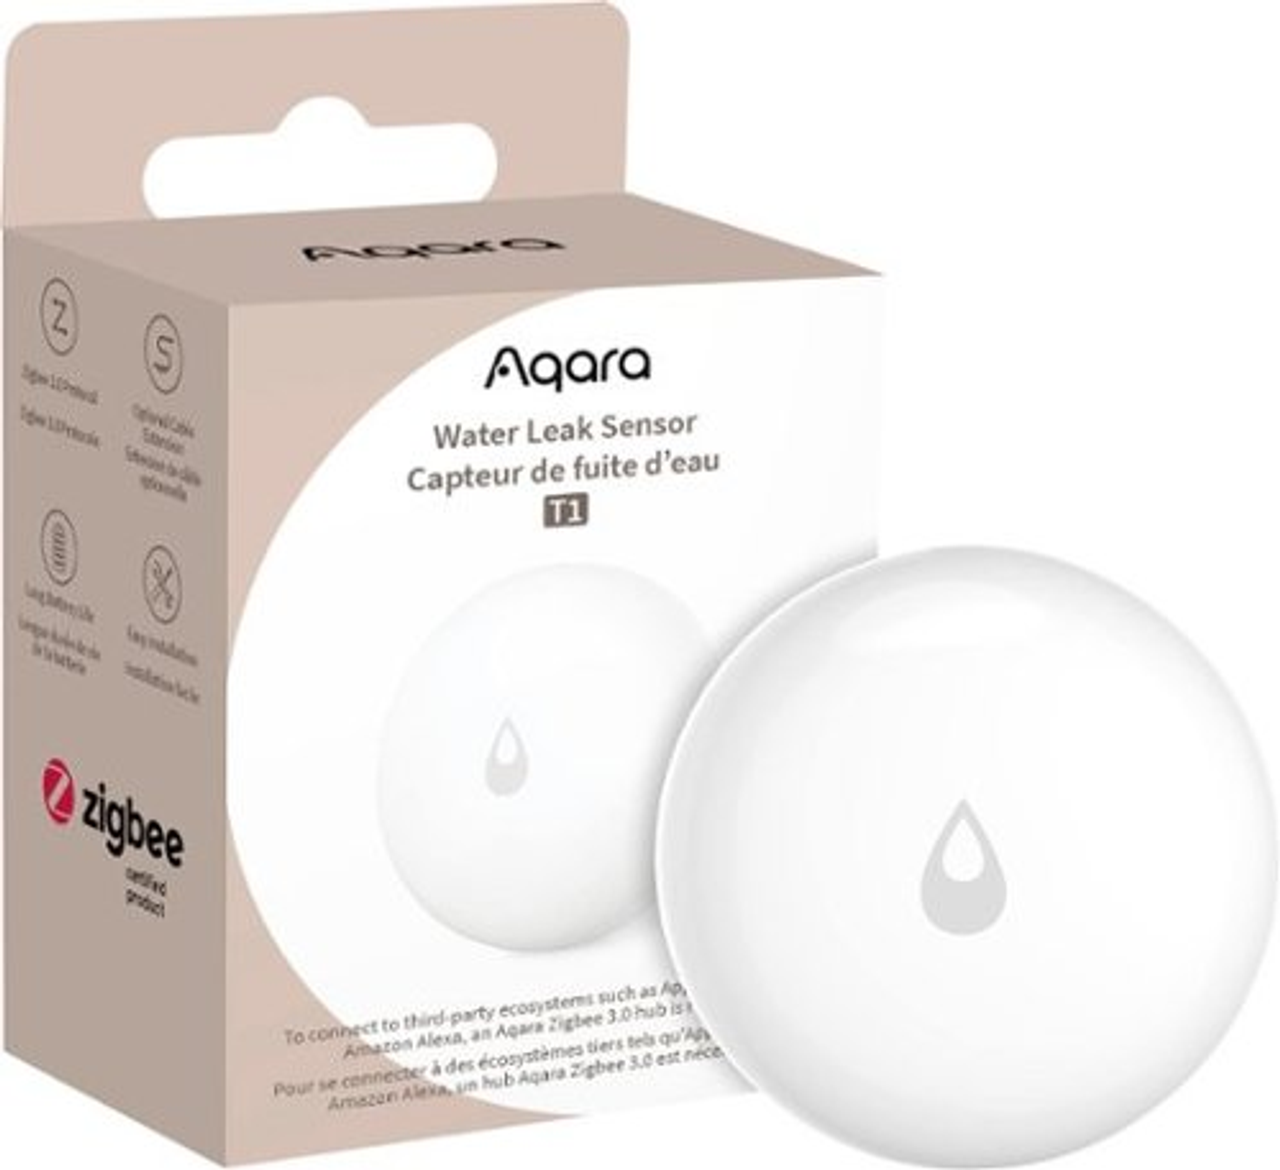 Aqara - Water Leak Sensor T1 - White